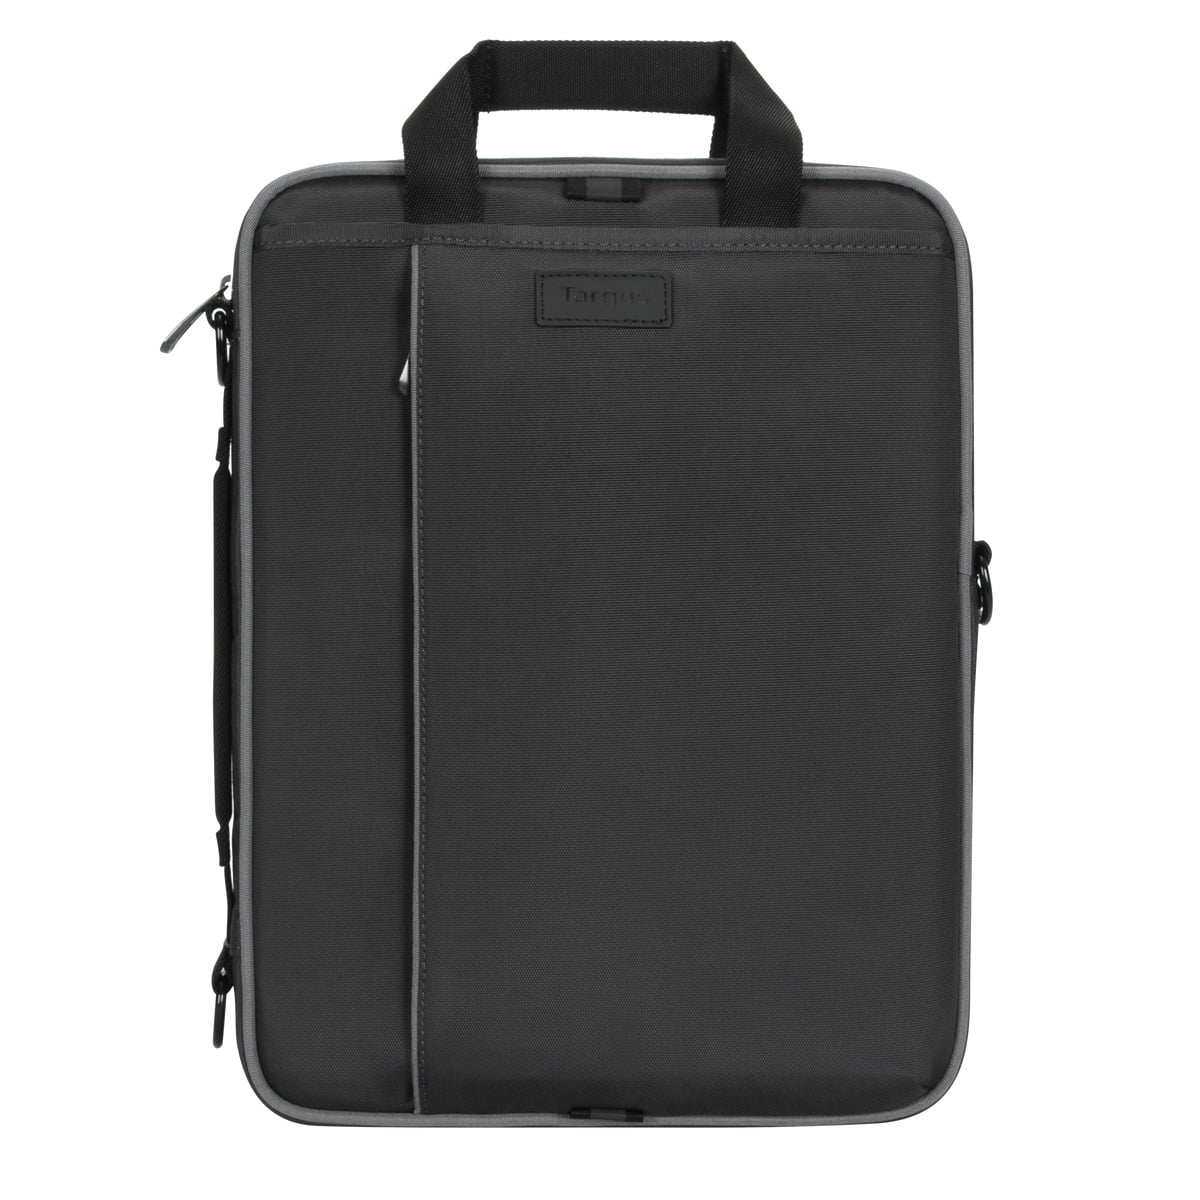 Dolce Gabbana Travel Work Laptop Case bag 